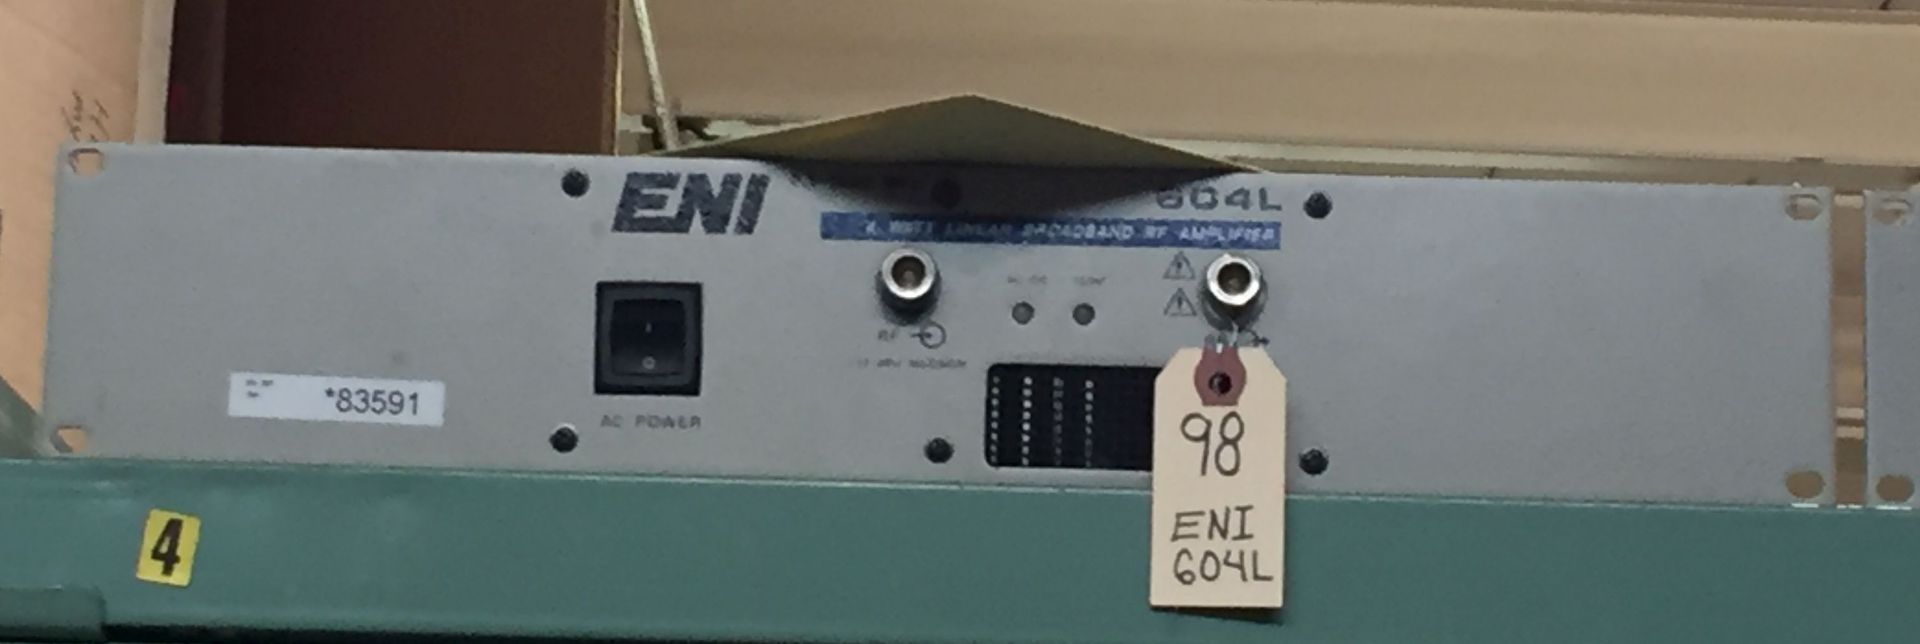 ENI 604L RF Amplifier